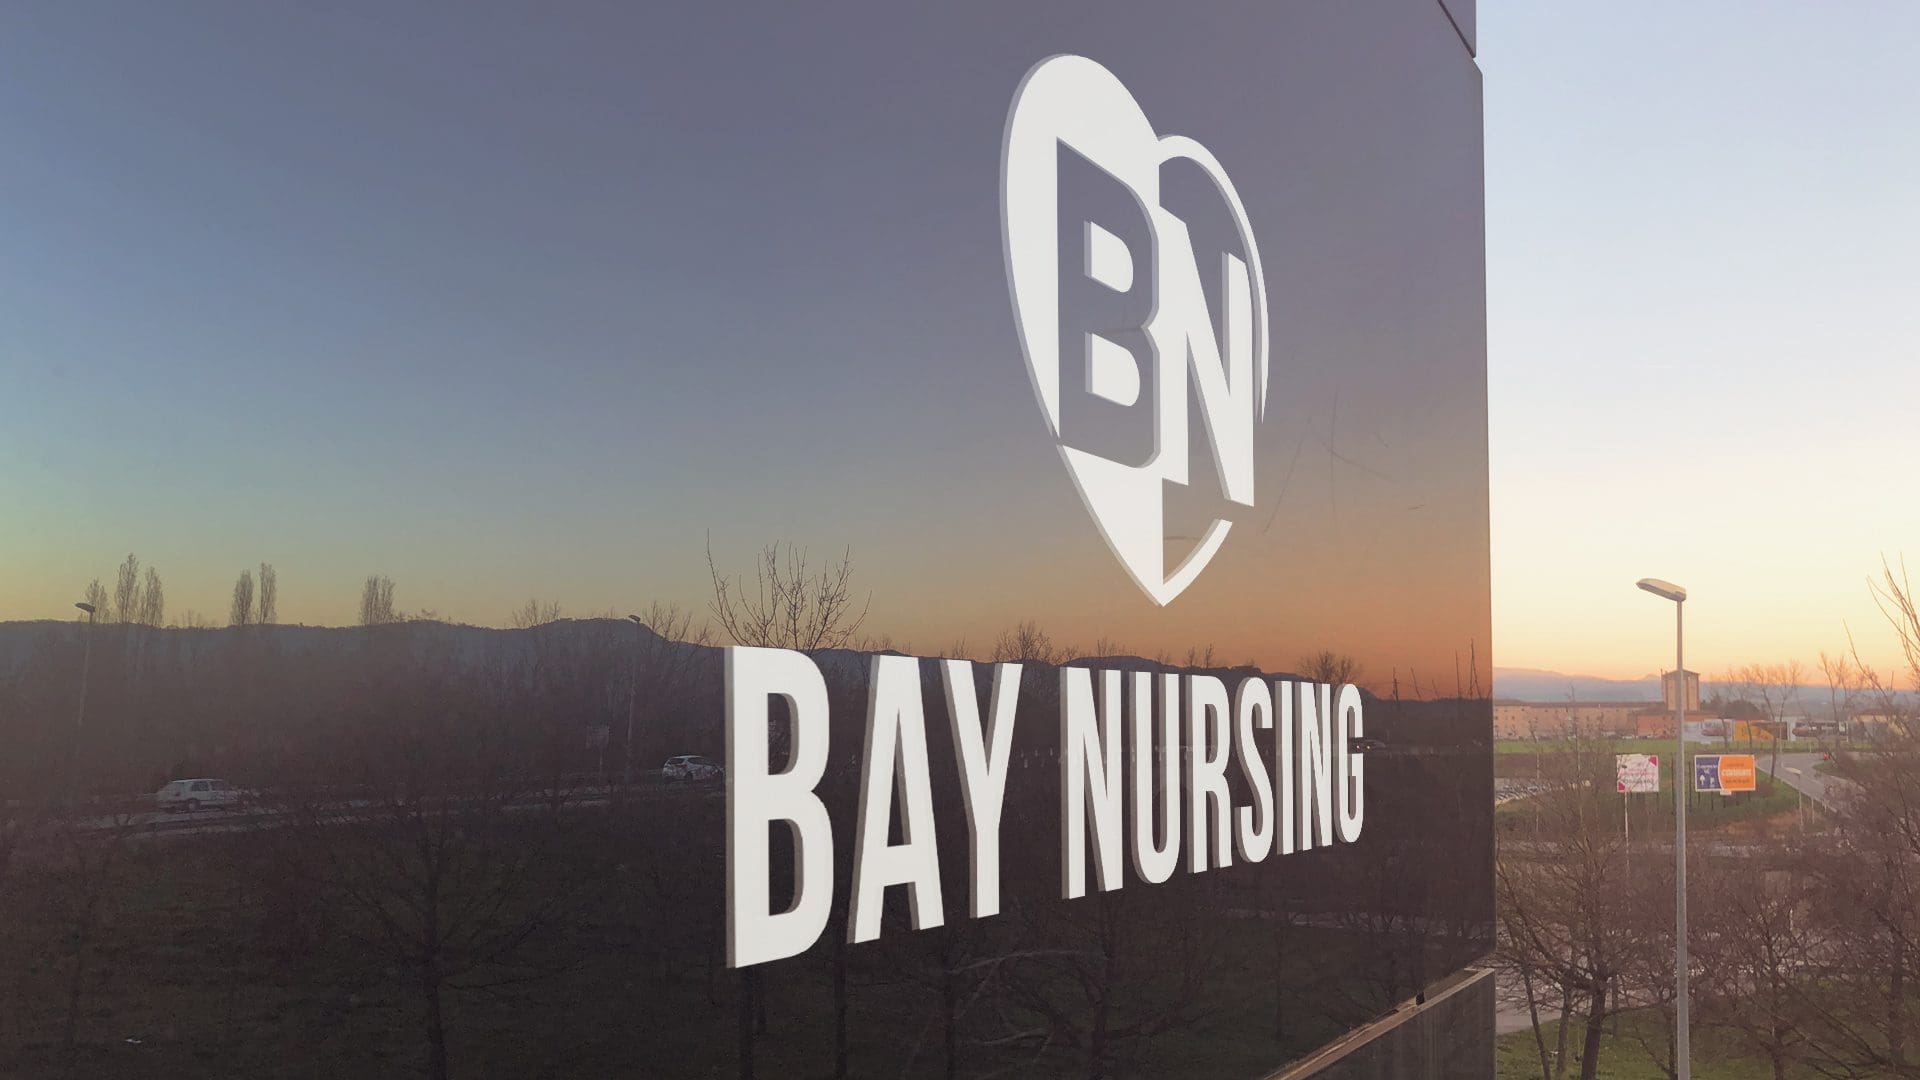 Bay Nursing – Branding